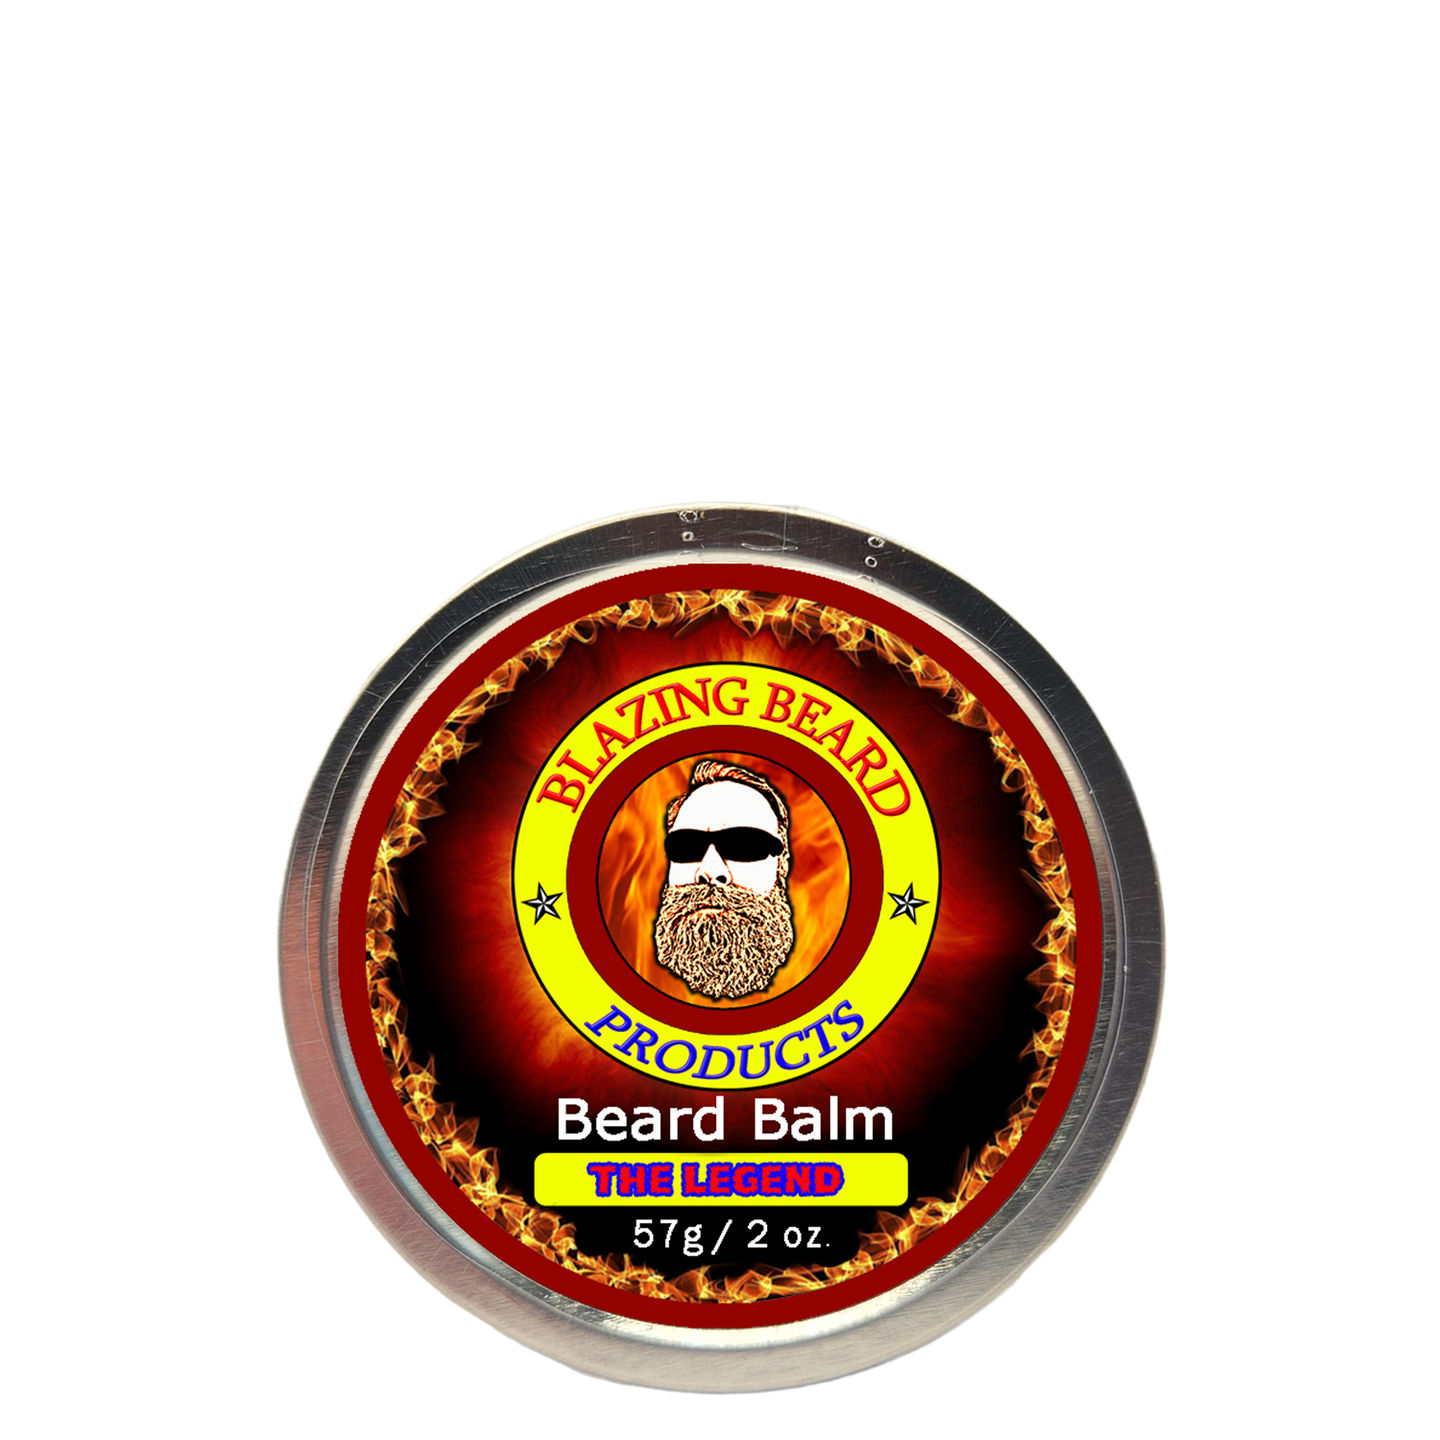 Blazing Beard Balm - The Legend